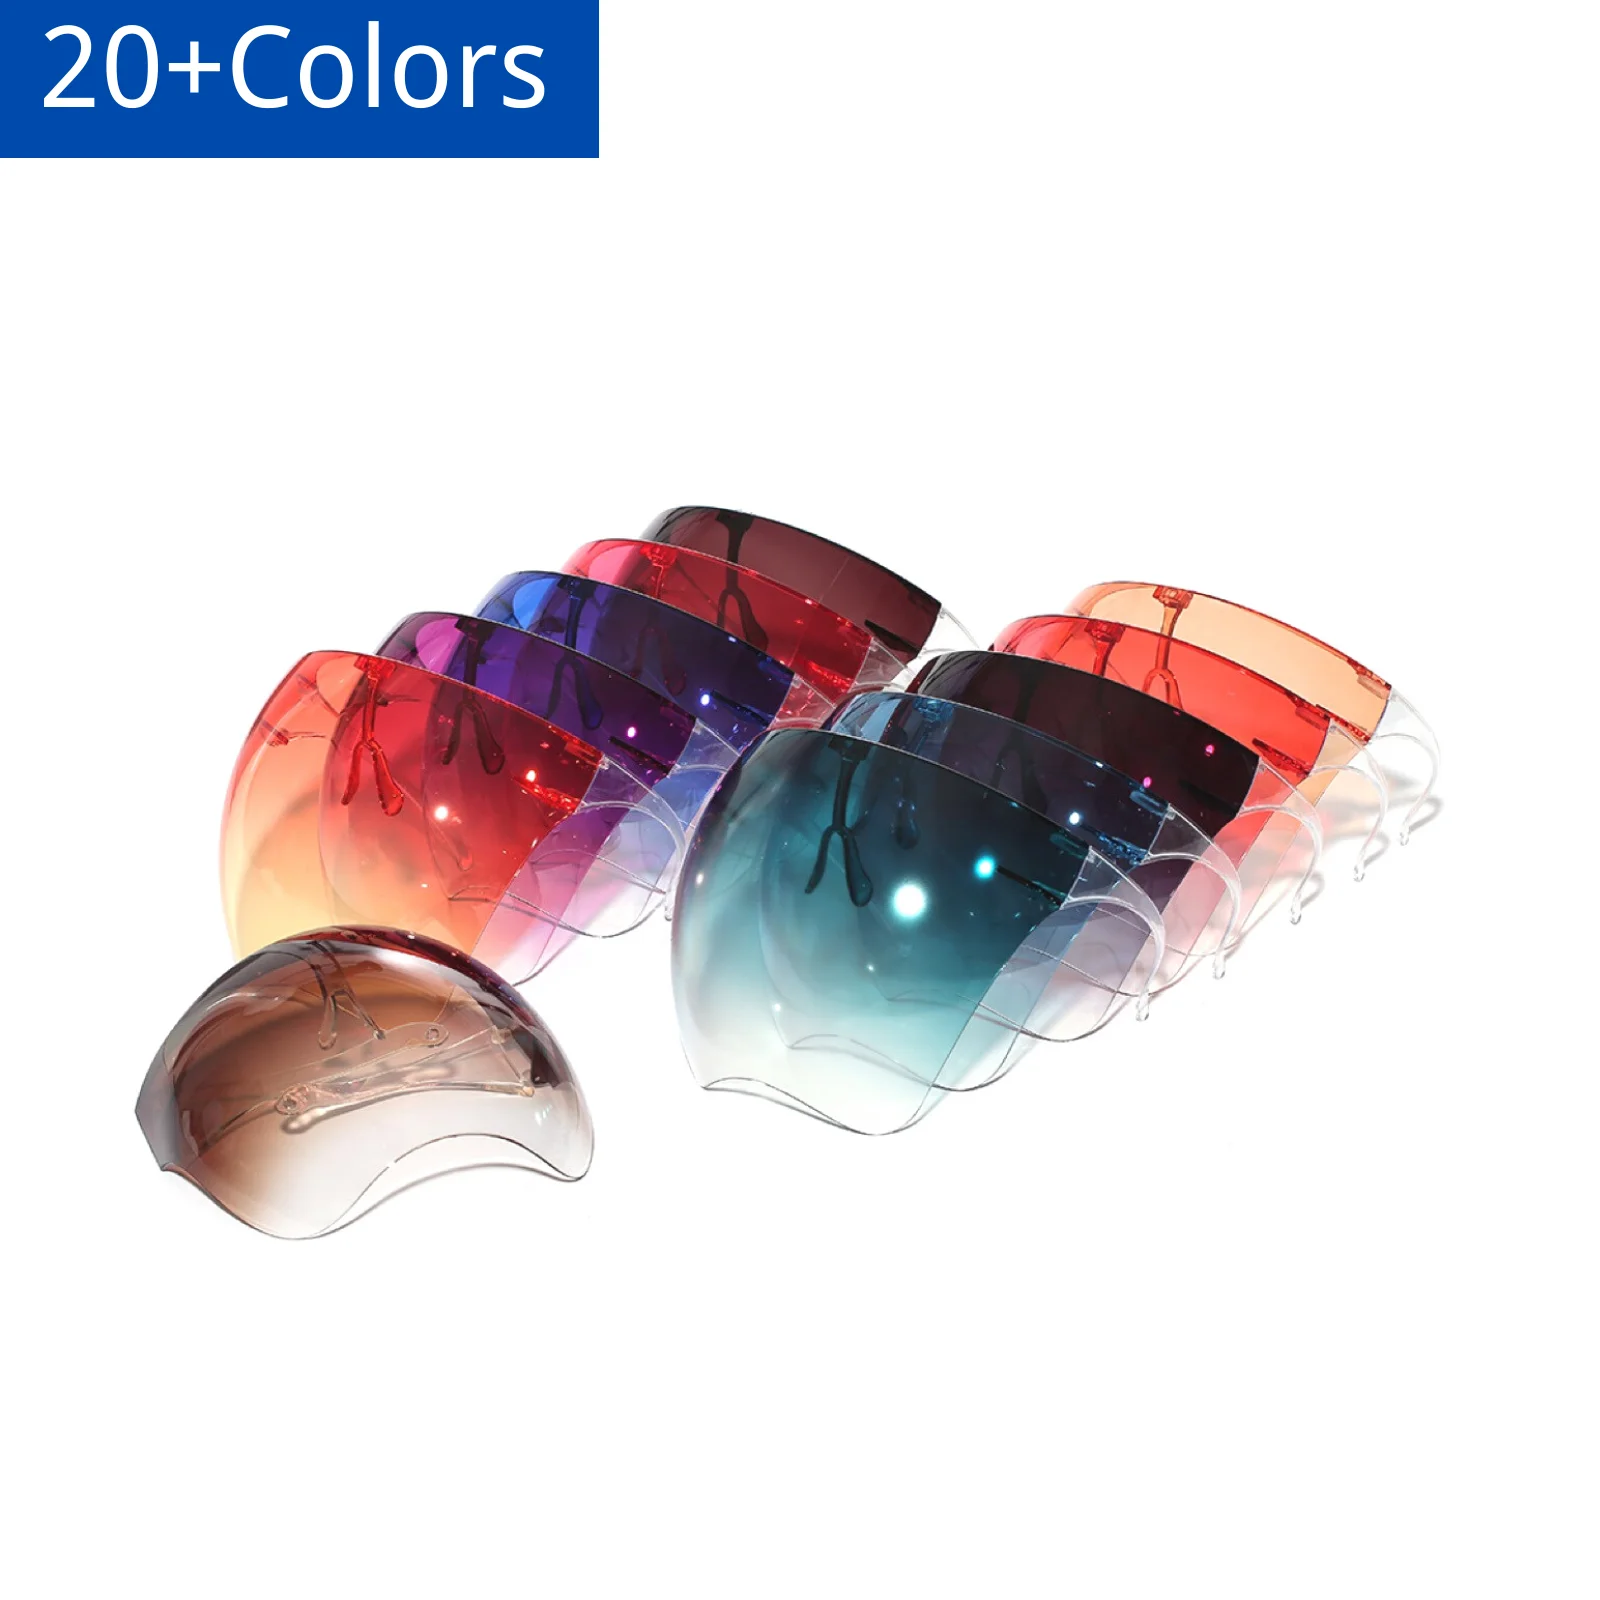 

VIFF High Quality Transparent Oversize Shield Visor Sunglasses HP20480 Multiple Colors Available Face Cover, Multi colors